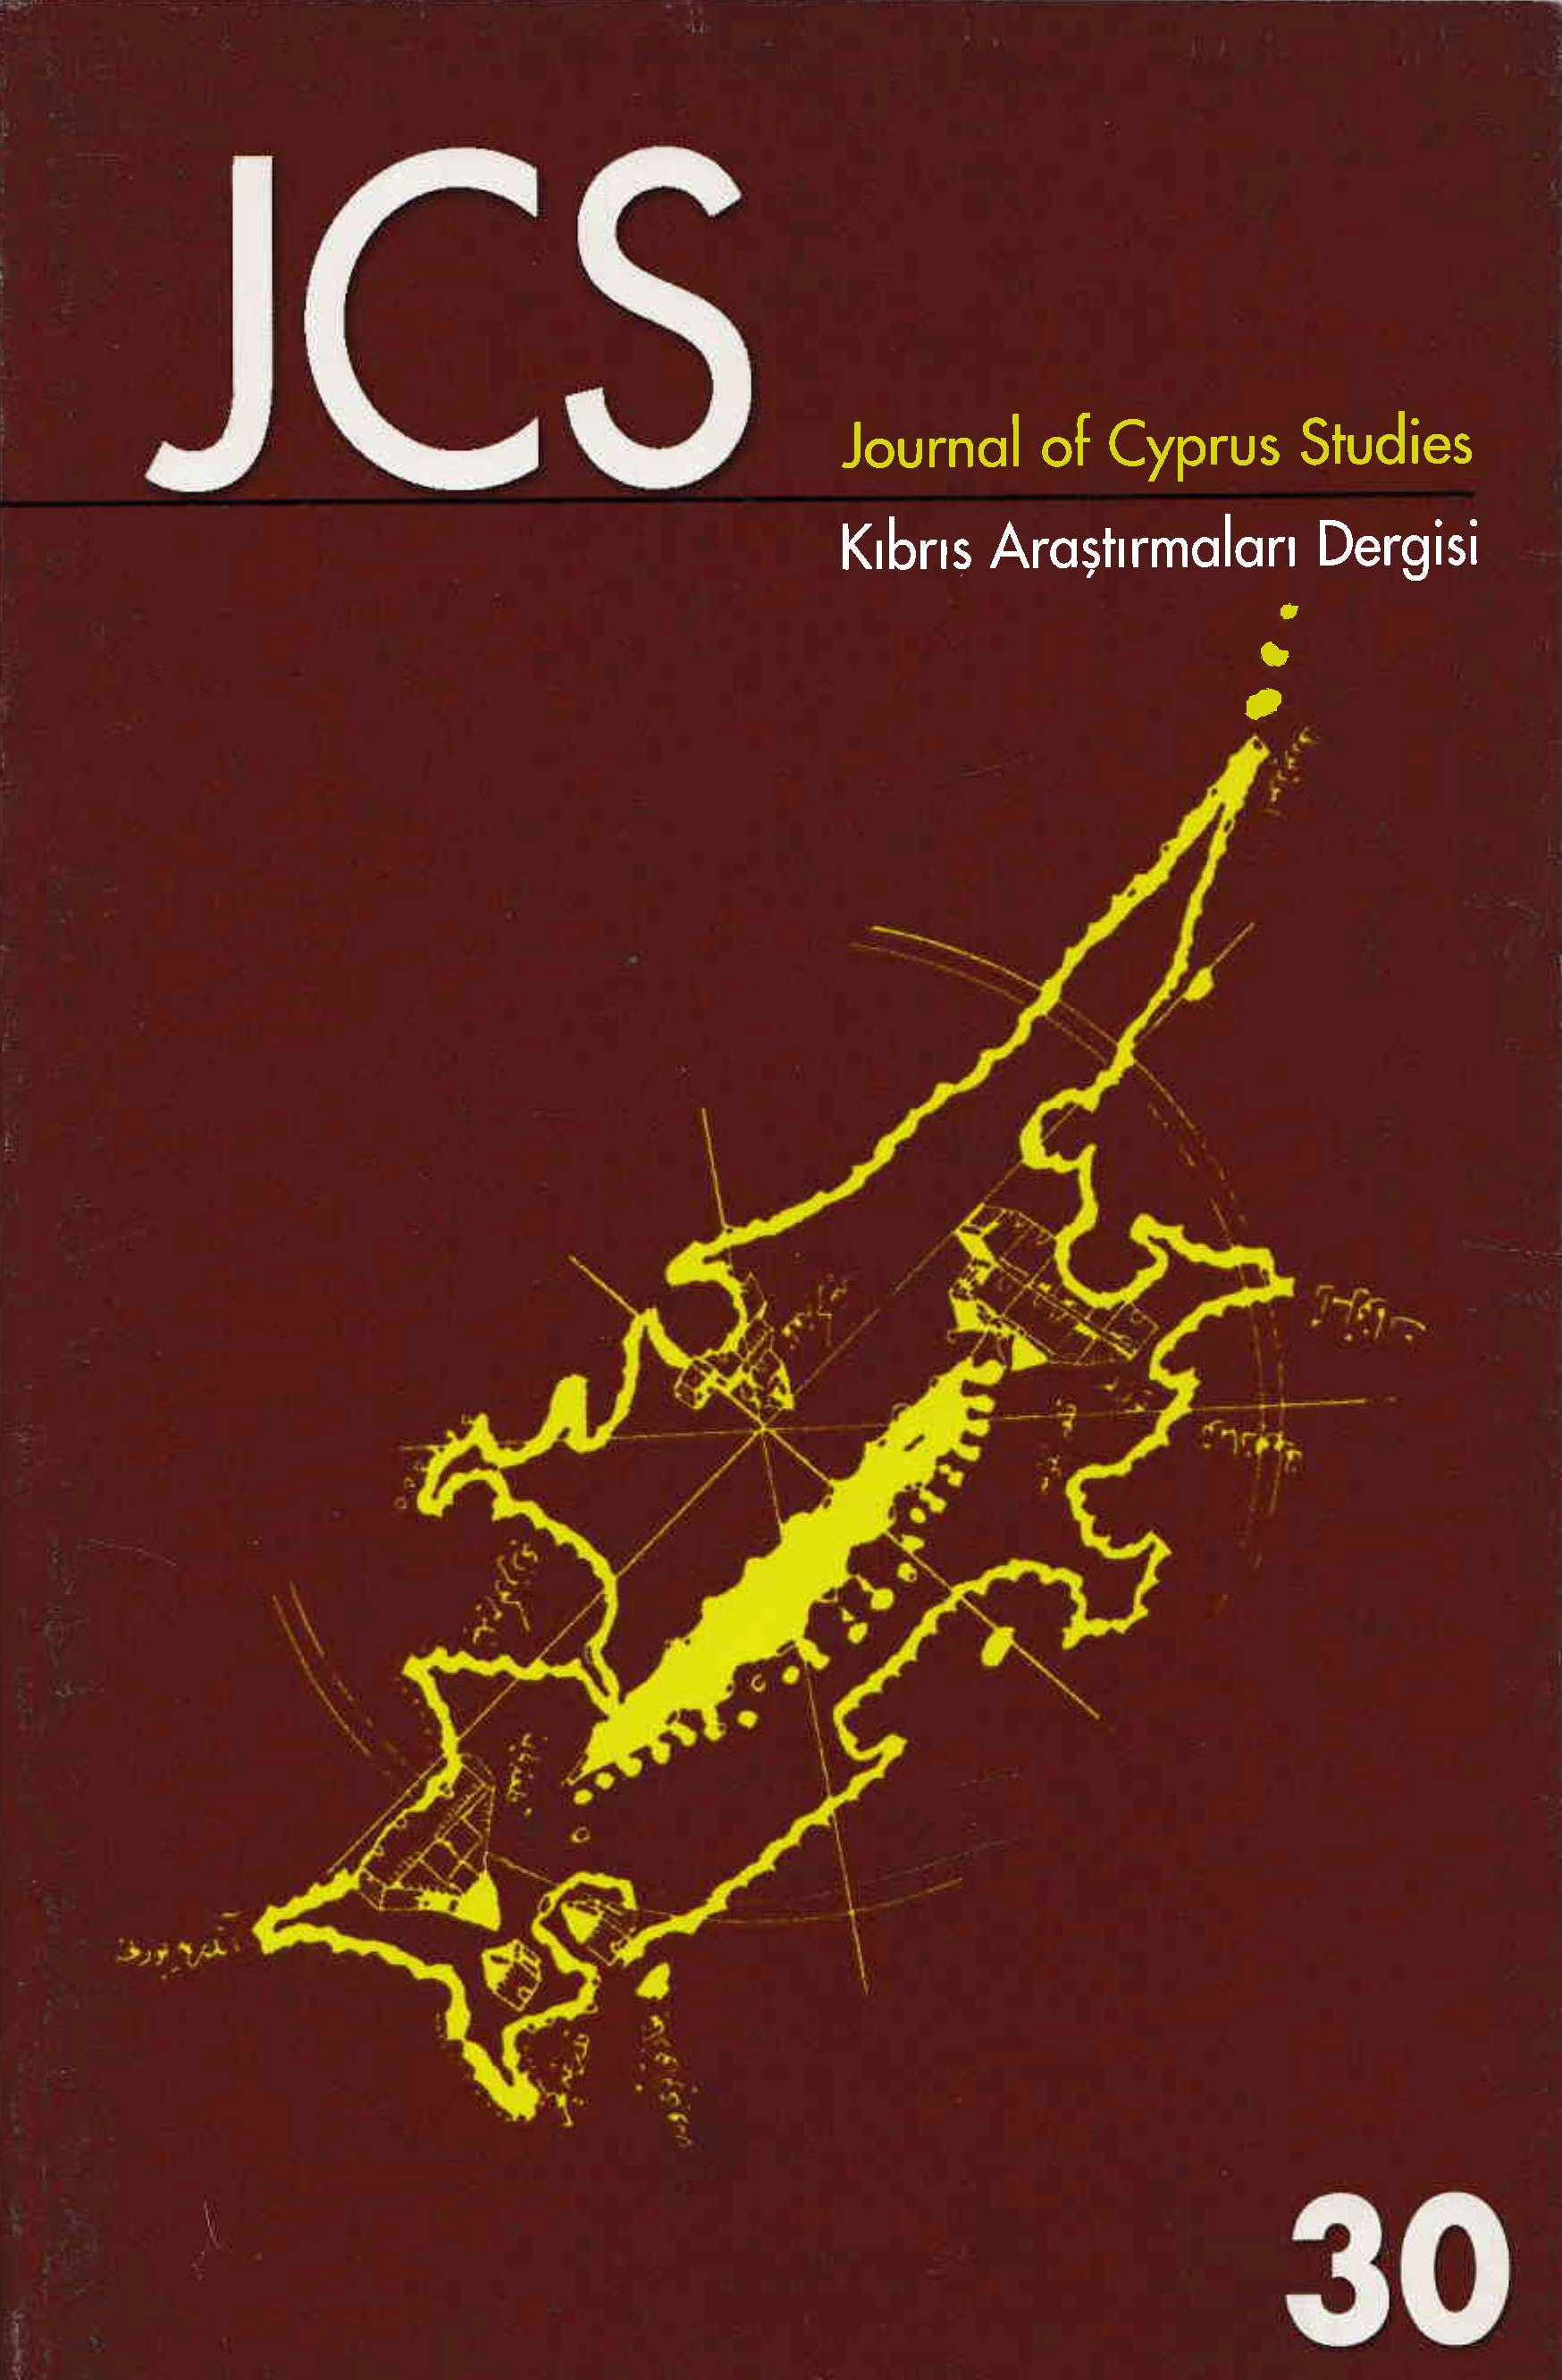 					View Vol. 12 No. 30 (2006): Journal of Cyprus Studies
				